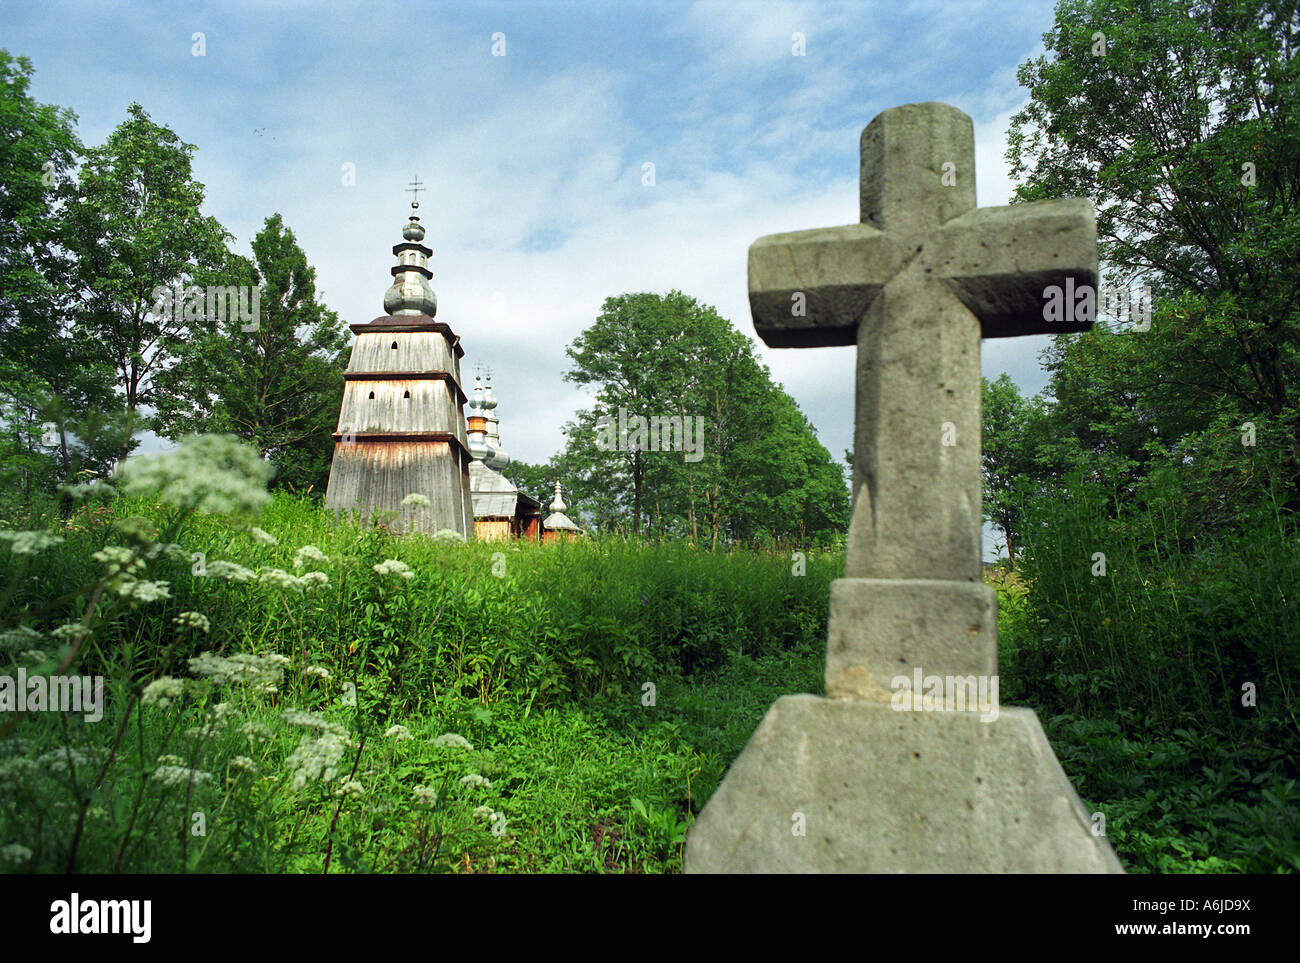 A cross near a Greek Orthodox church, Turzansk, Poland Stock Photo